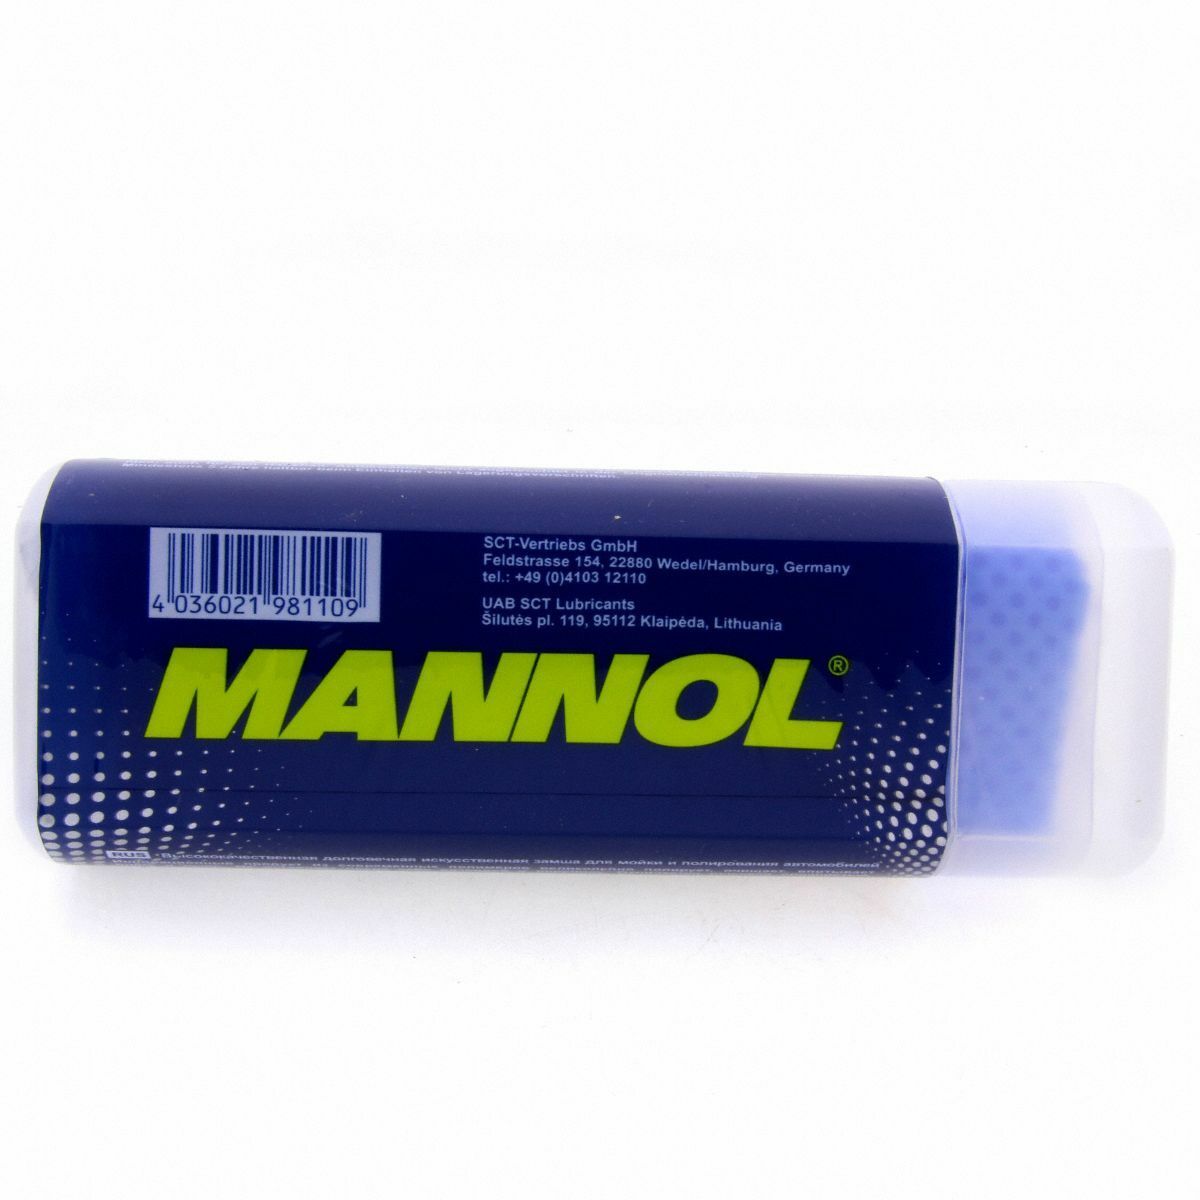 3x MANNOL 9811 Synthetic Chamois Gämse Kunstledertuch Politur Reinigung